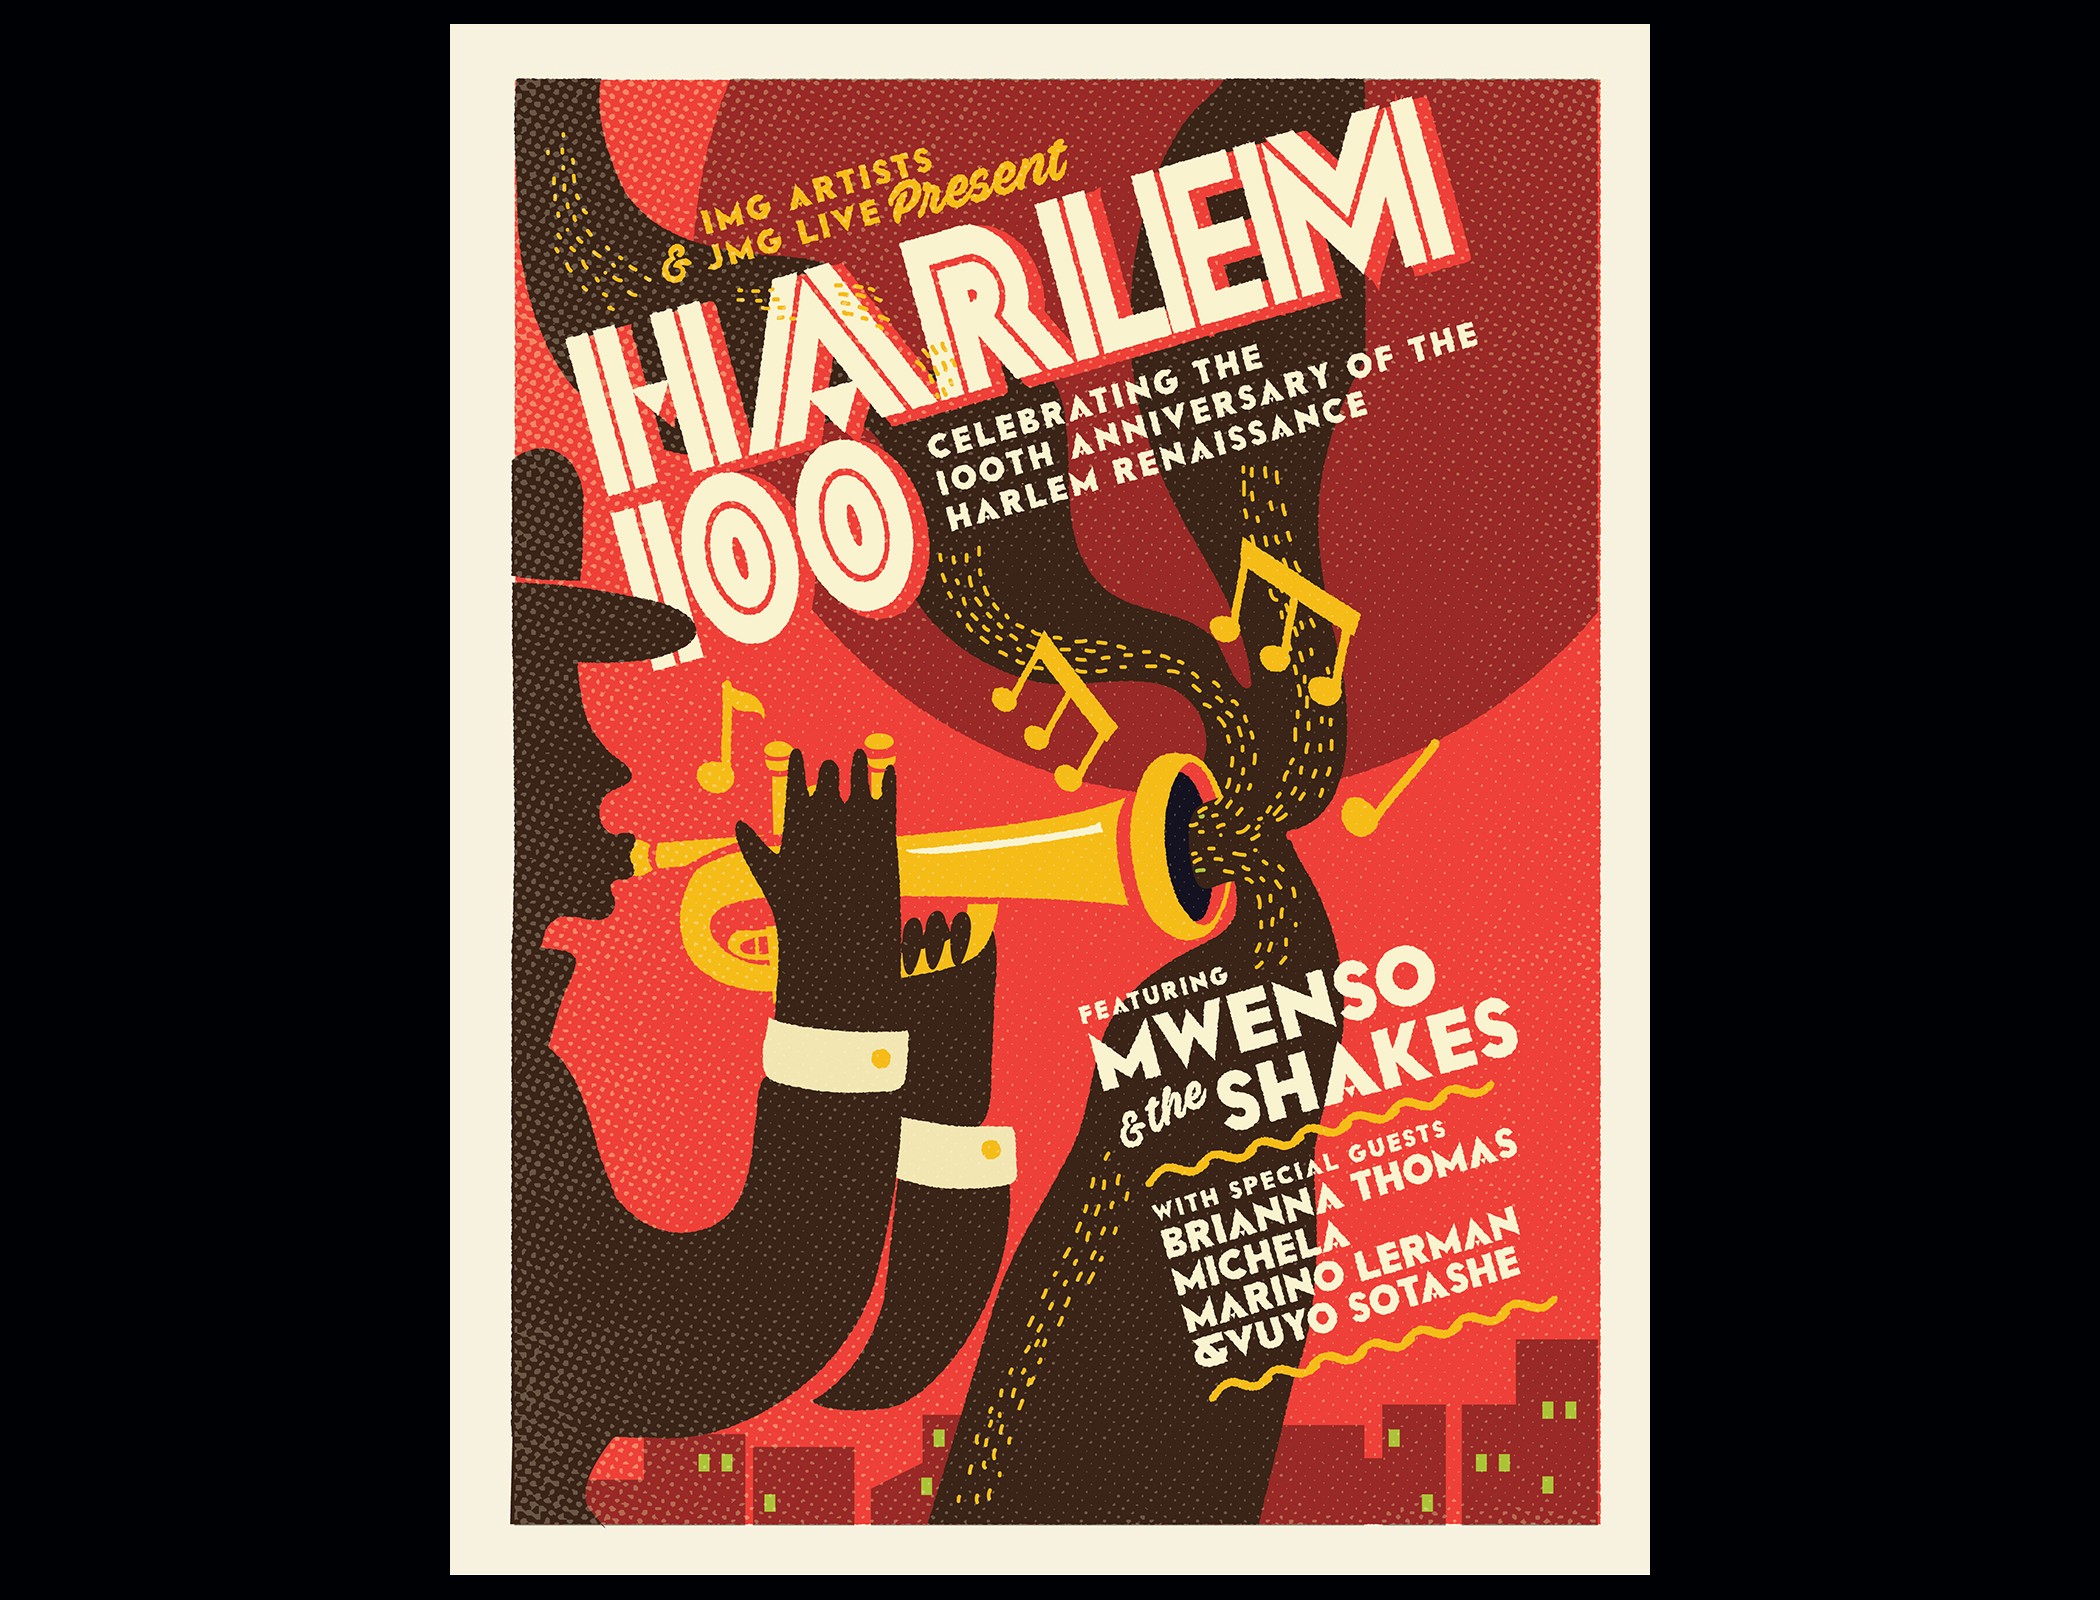 Harlem 100 Featuring Mwenso & The Shakes - Mayo Performing Arts Center